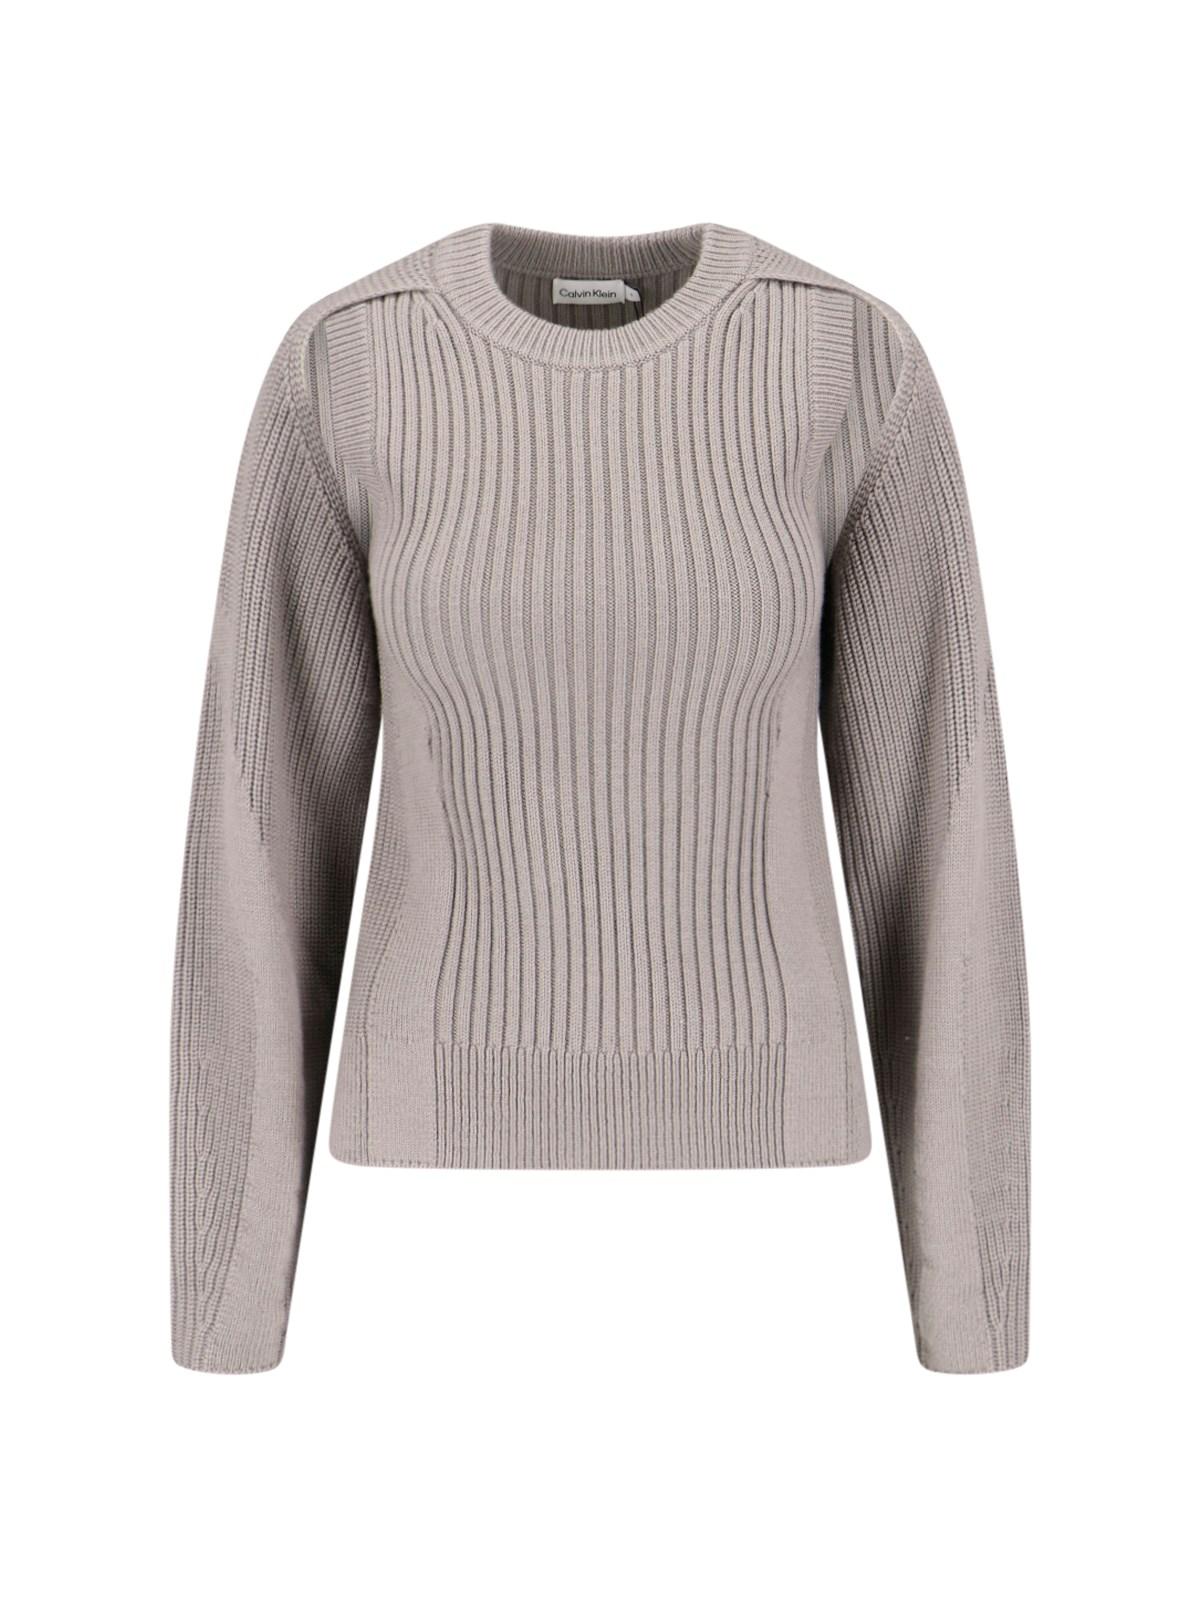 Calvin Klein Cutout Detail Sweater in Gray | Lyst